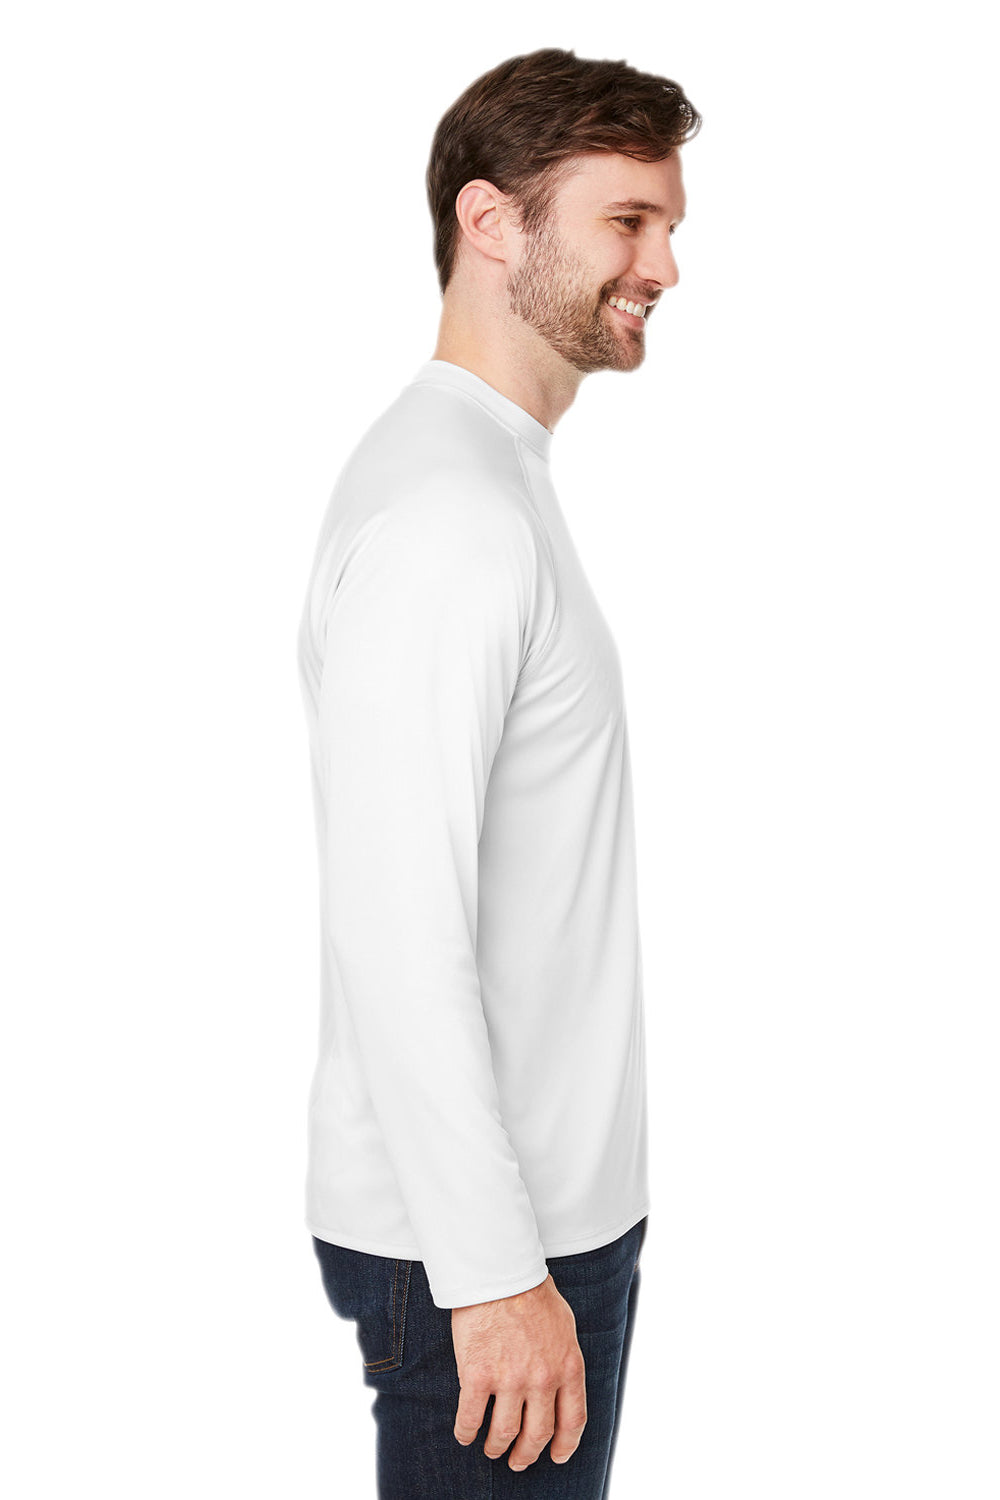 Core 365 CE110 Mens Ultra MVP Raglan Long Sleeve T-Shirt White Side